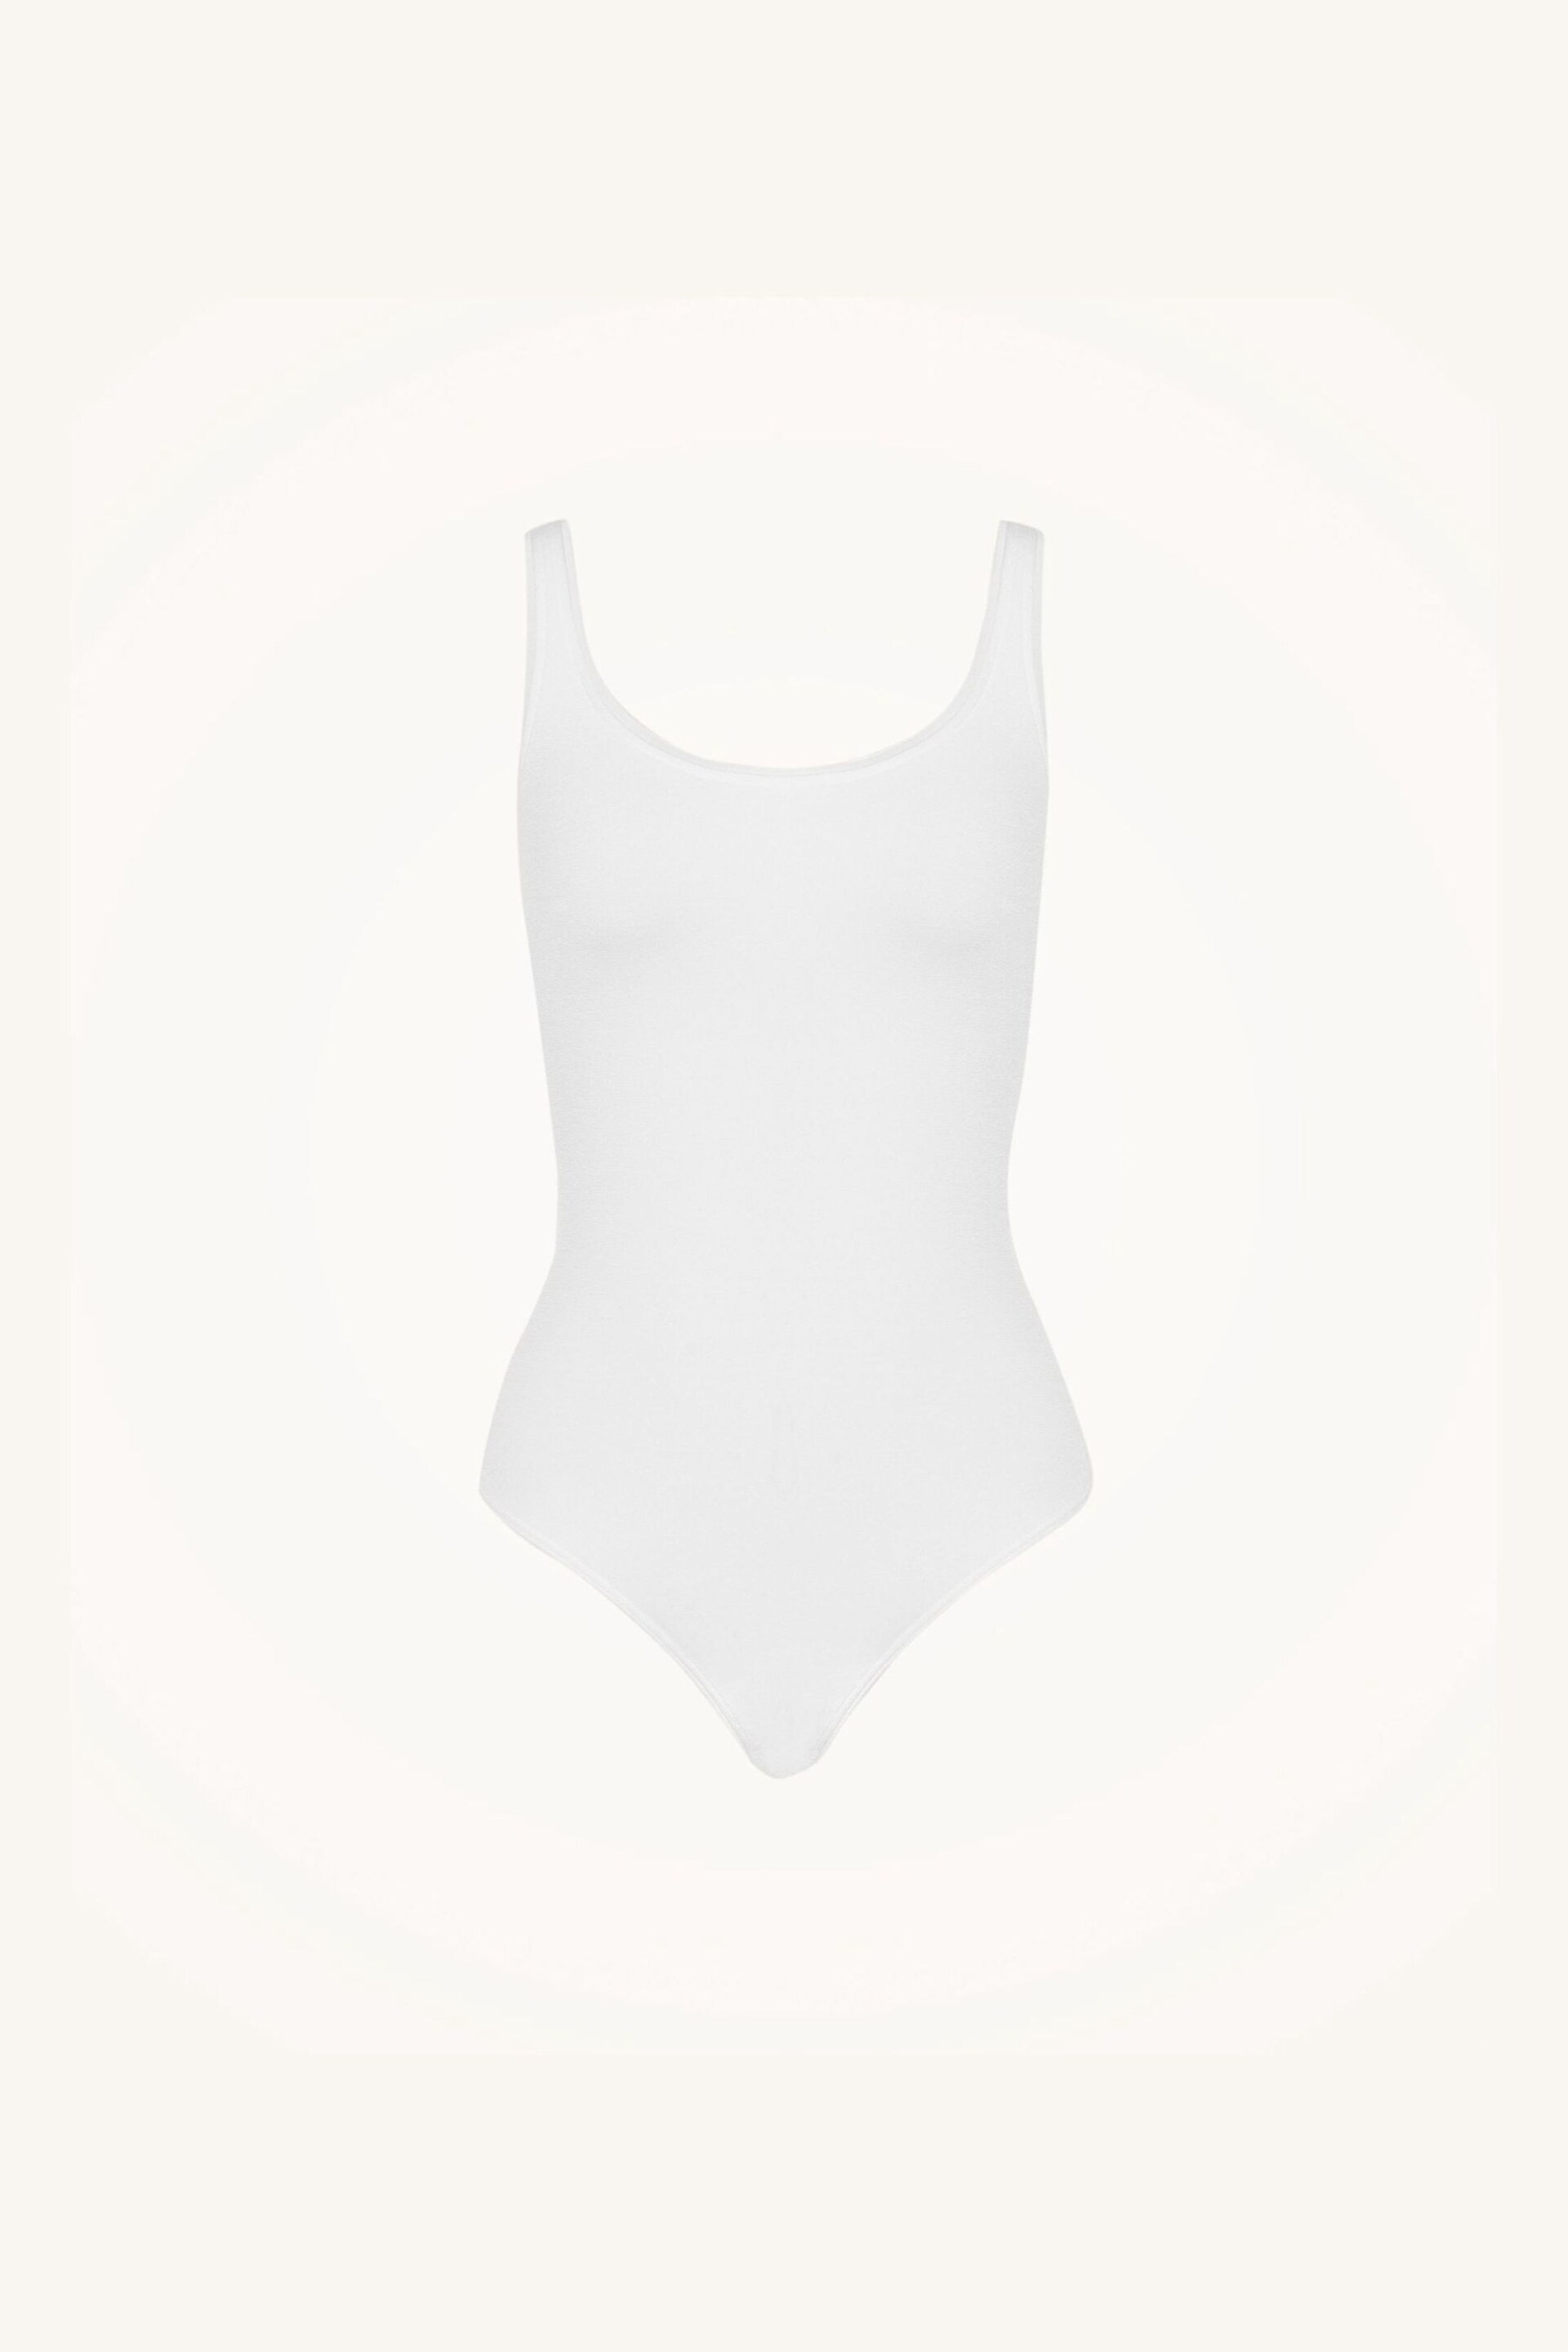 Wolford White Jamaika Vest String Bodysuit - Image 4 of 4